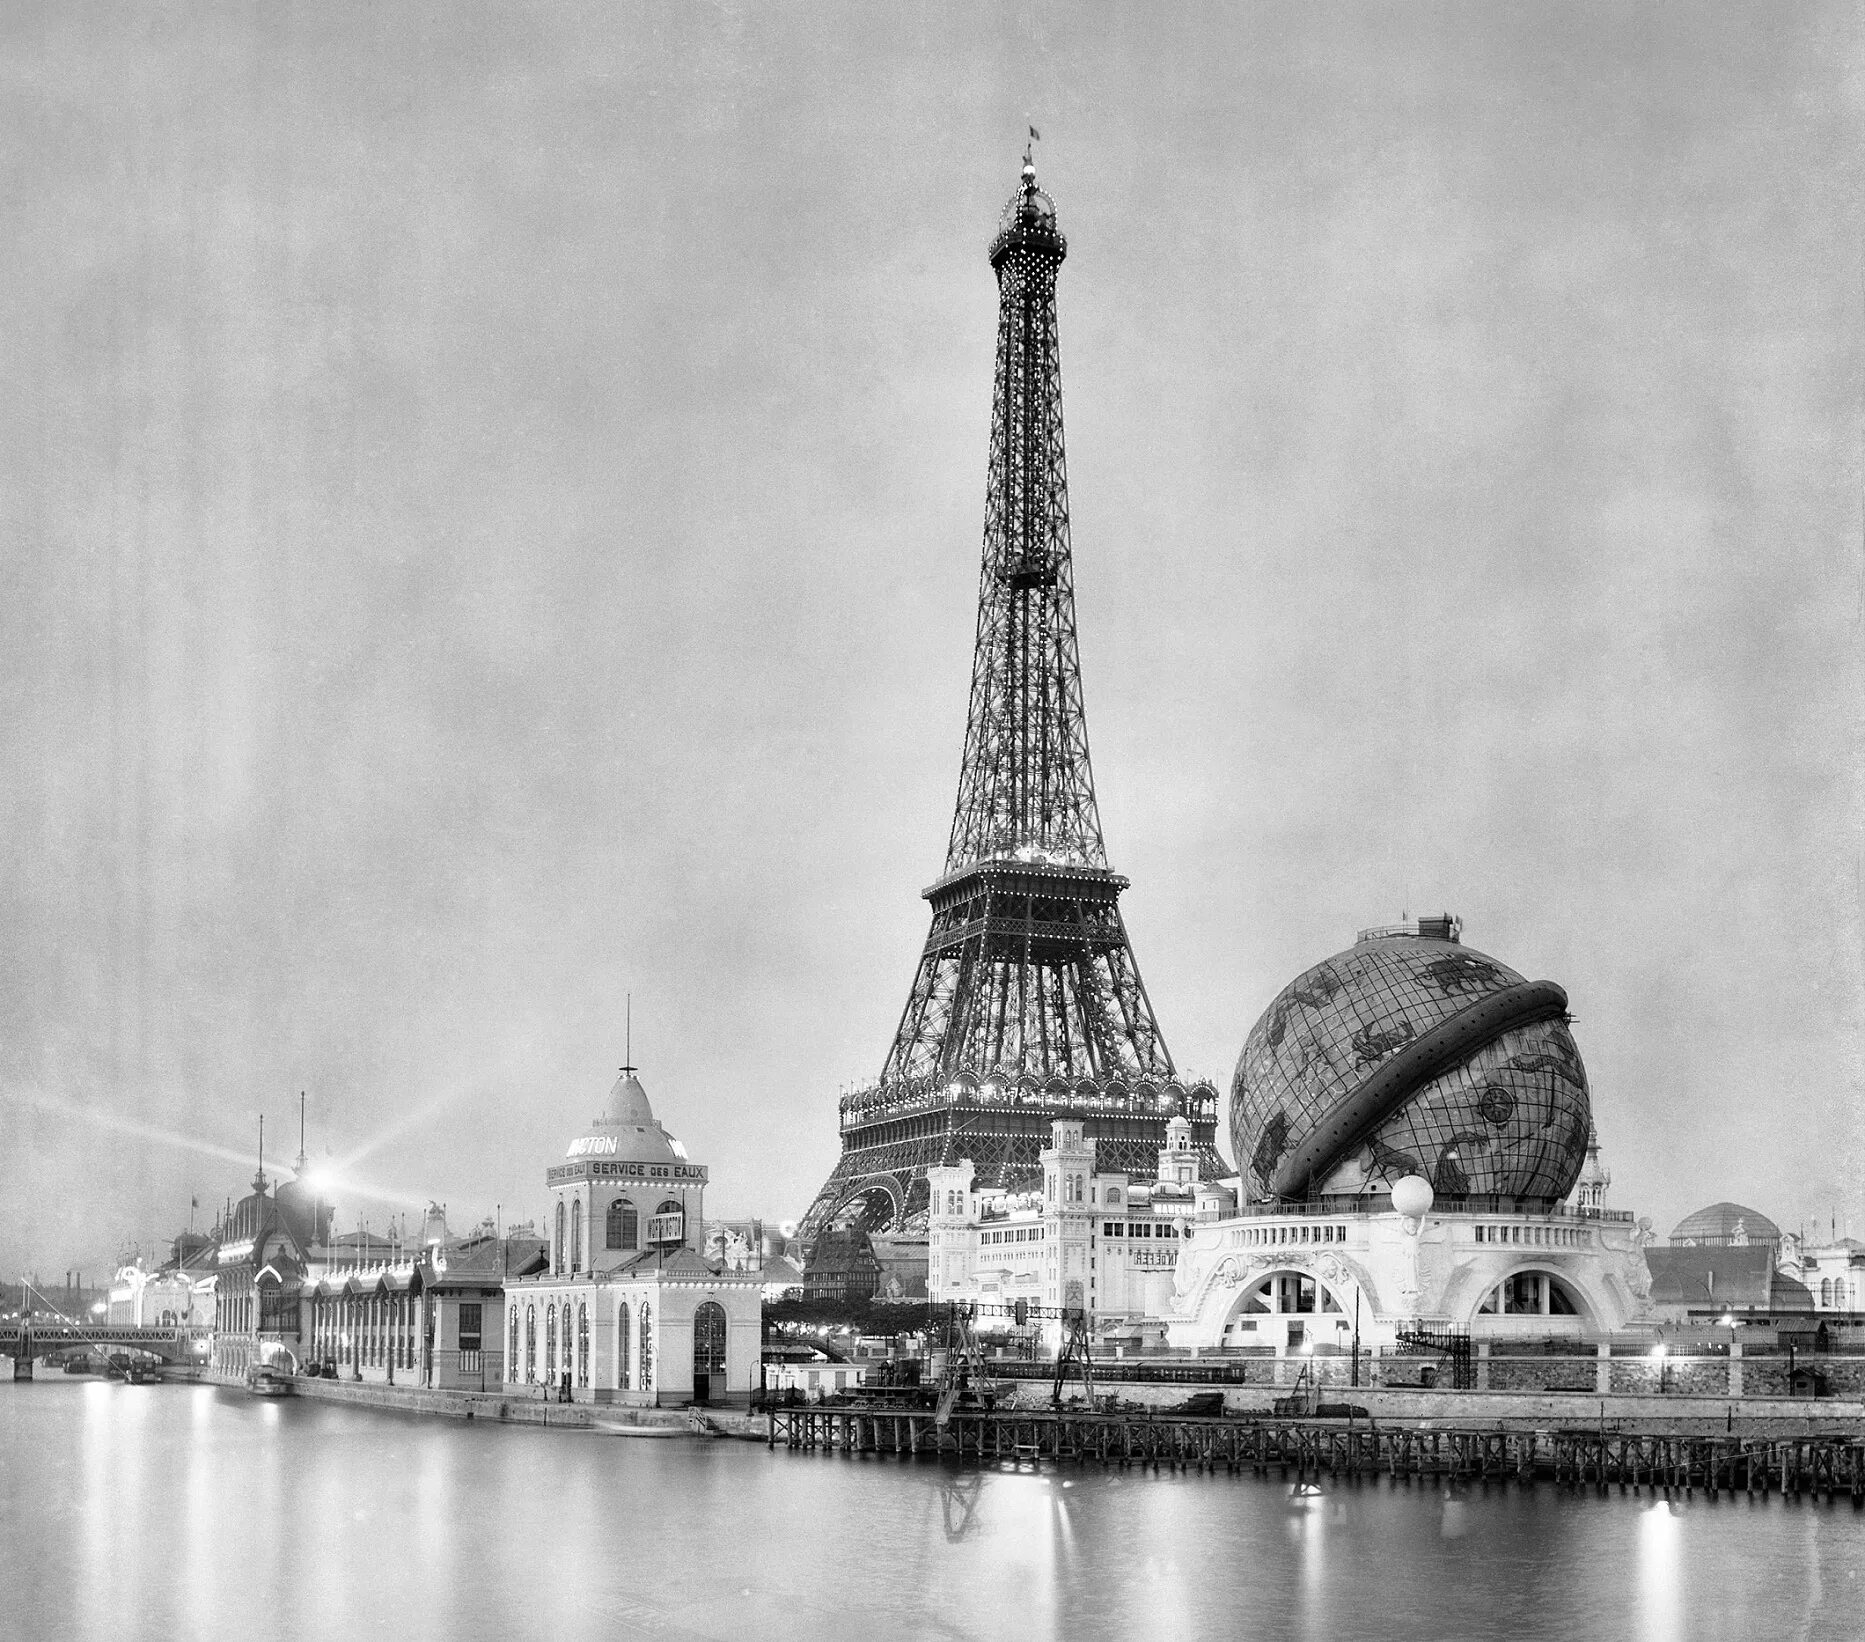 Париж 19 век Эйфелева башня. Эйфелева башня 20 век. Эйфелева башня в Париже 1889 год. Франция 20 век Эйфелева башня.